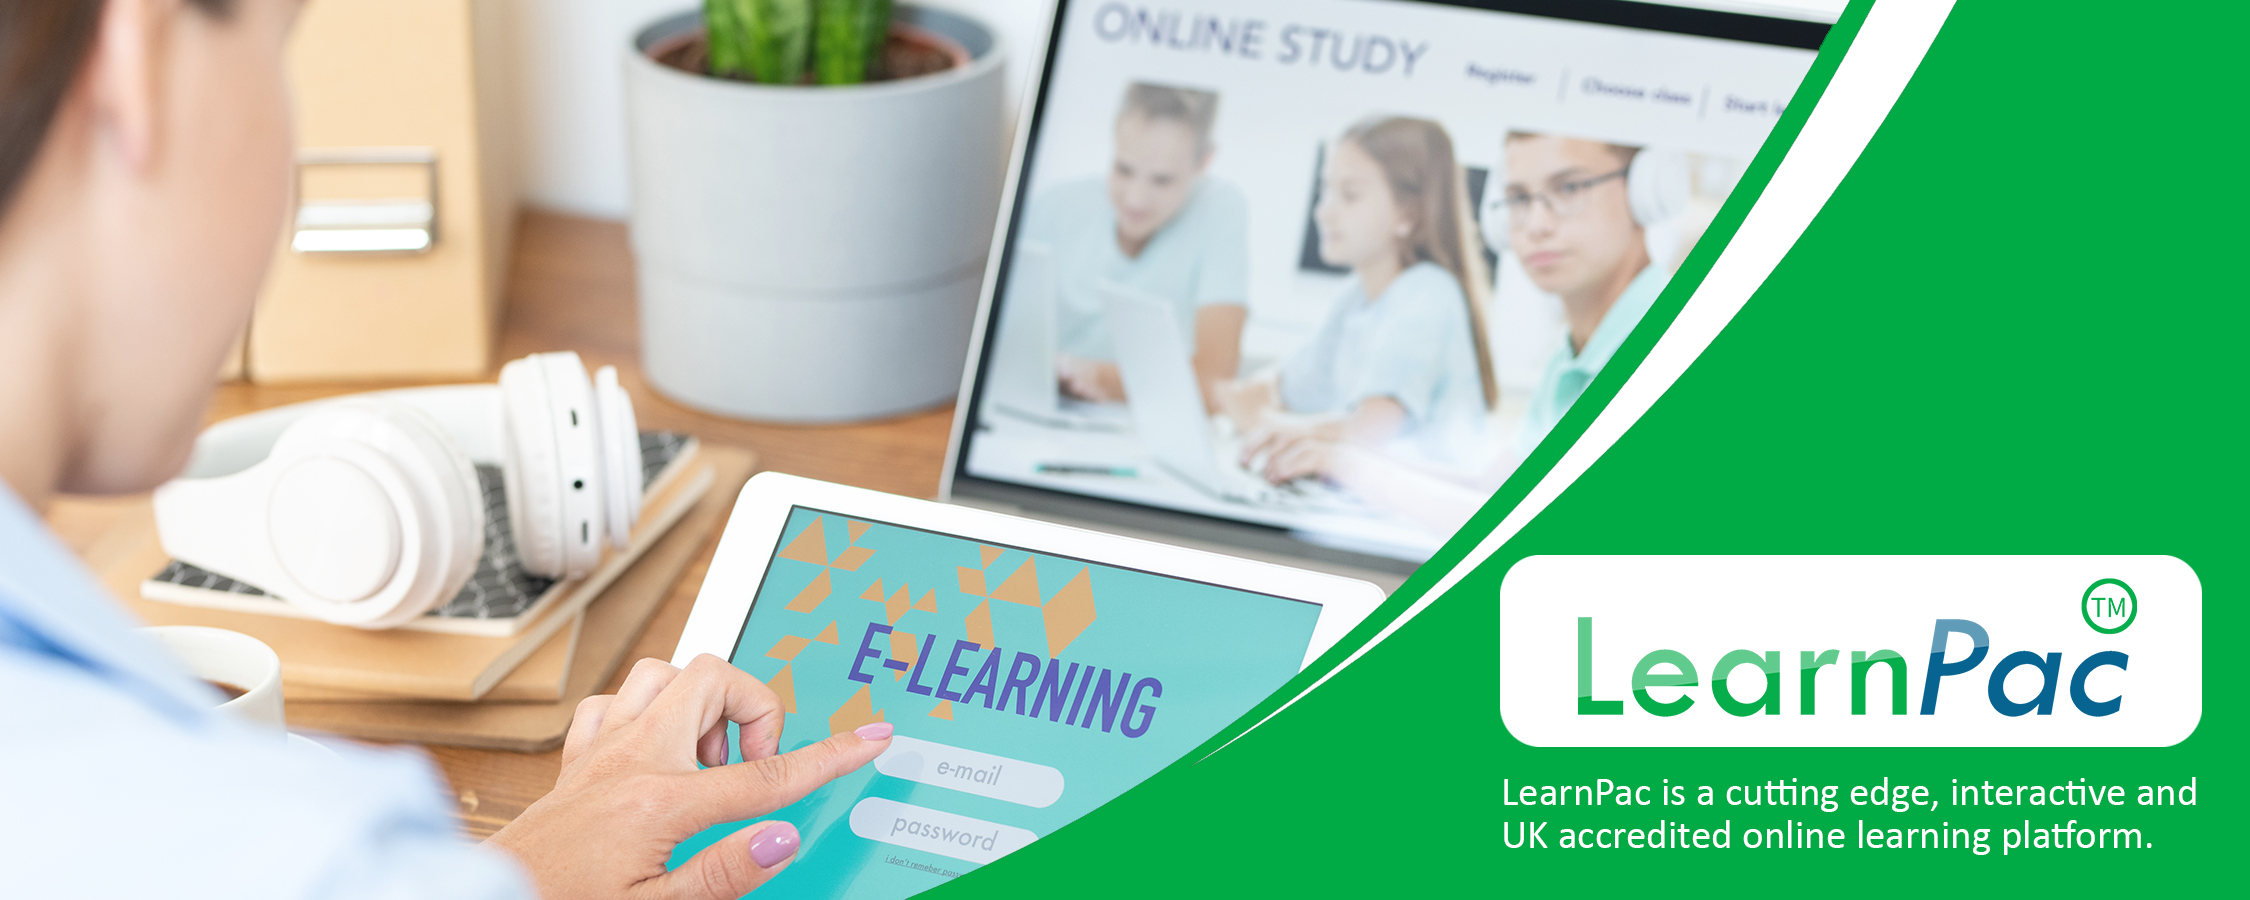 Business Acumen Training - Online Learning Courses - E-Learning Courses - LearnPac Systems UK -